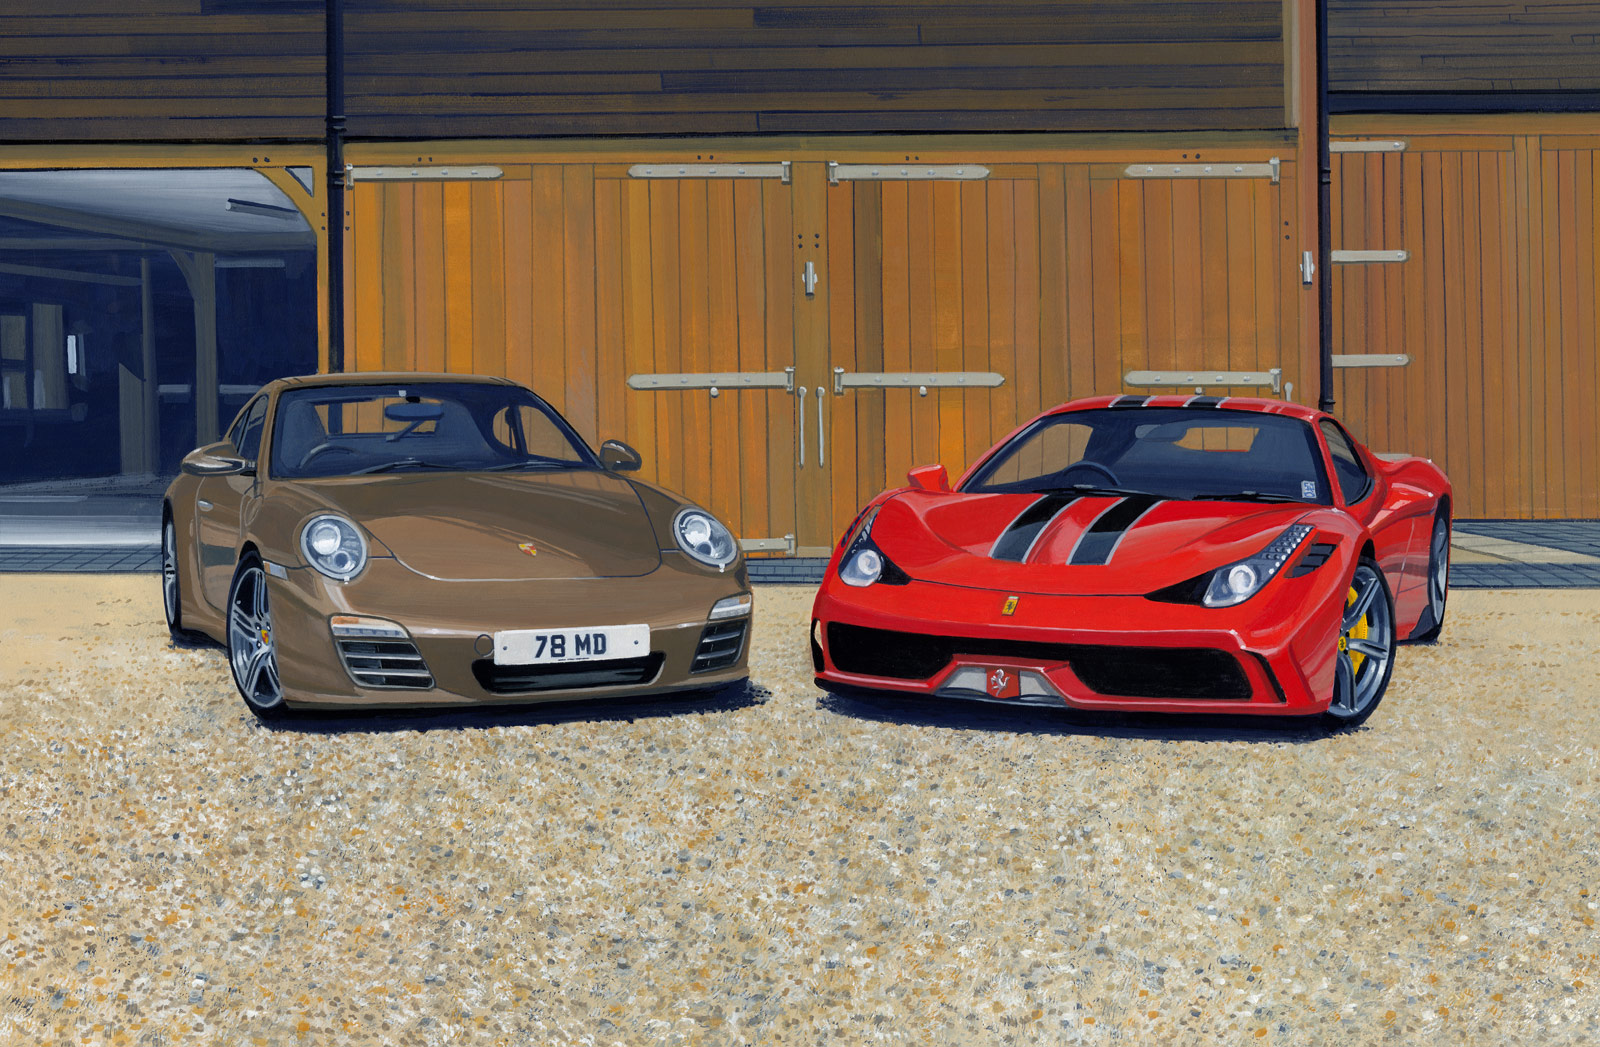 Porsche 997 911 Targa 4S and Ferrari 458 Speciale